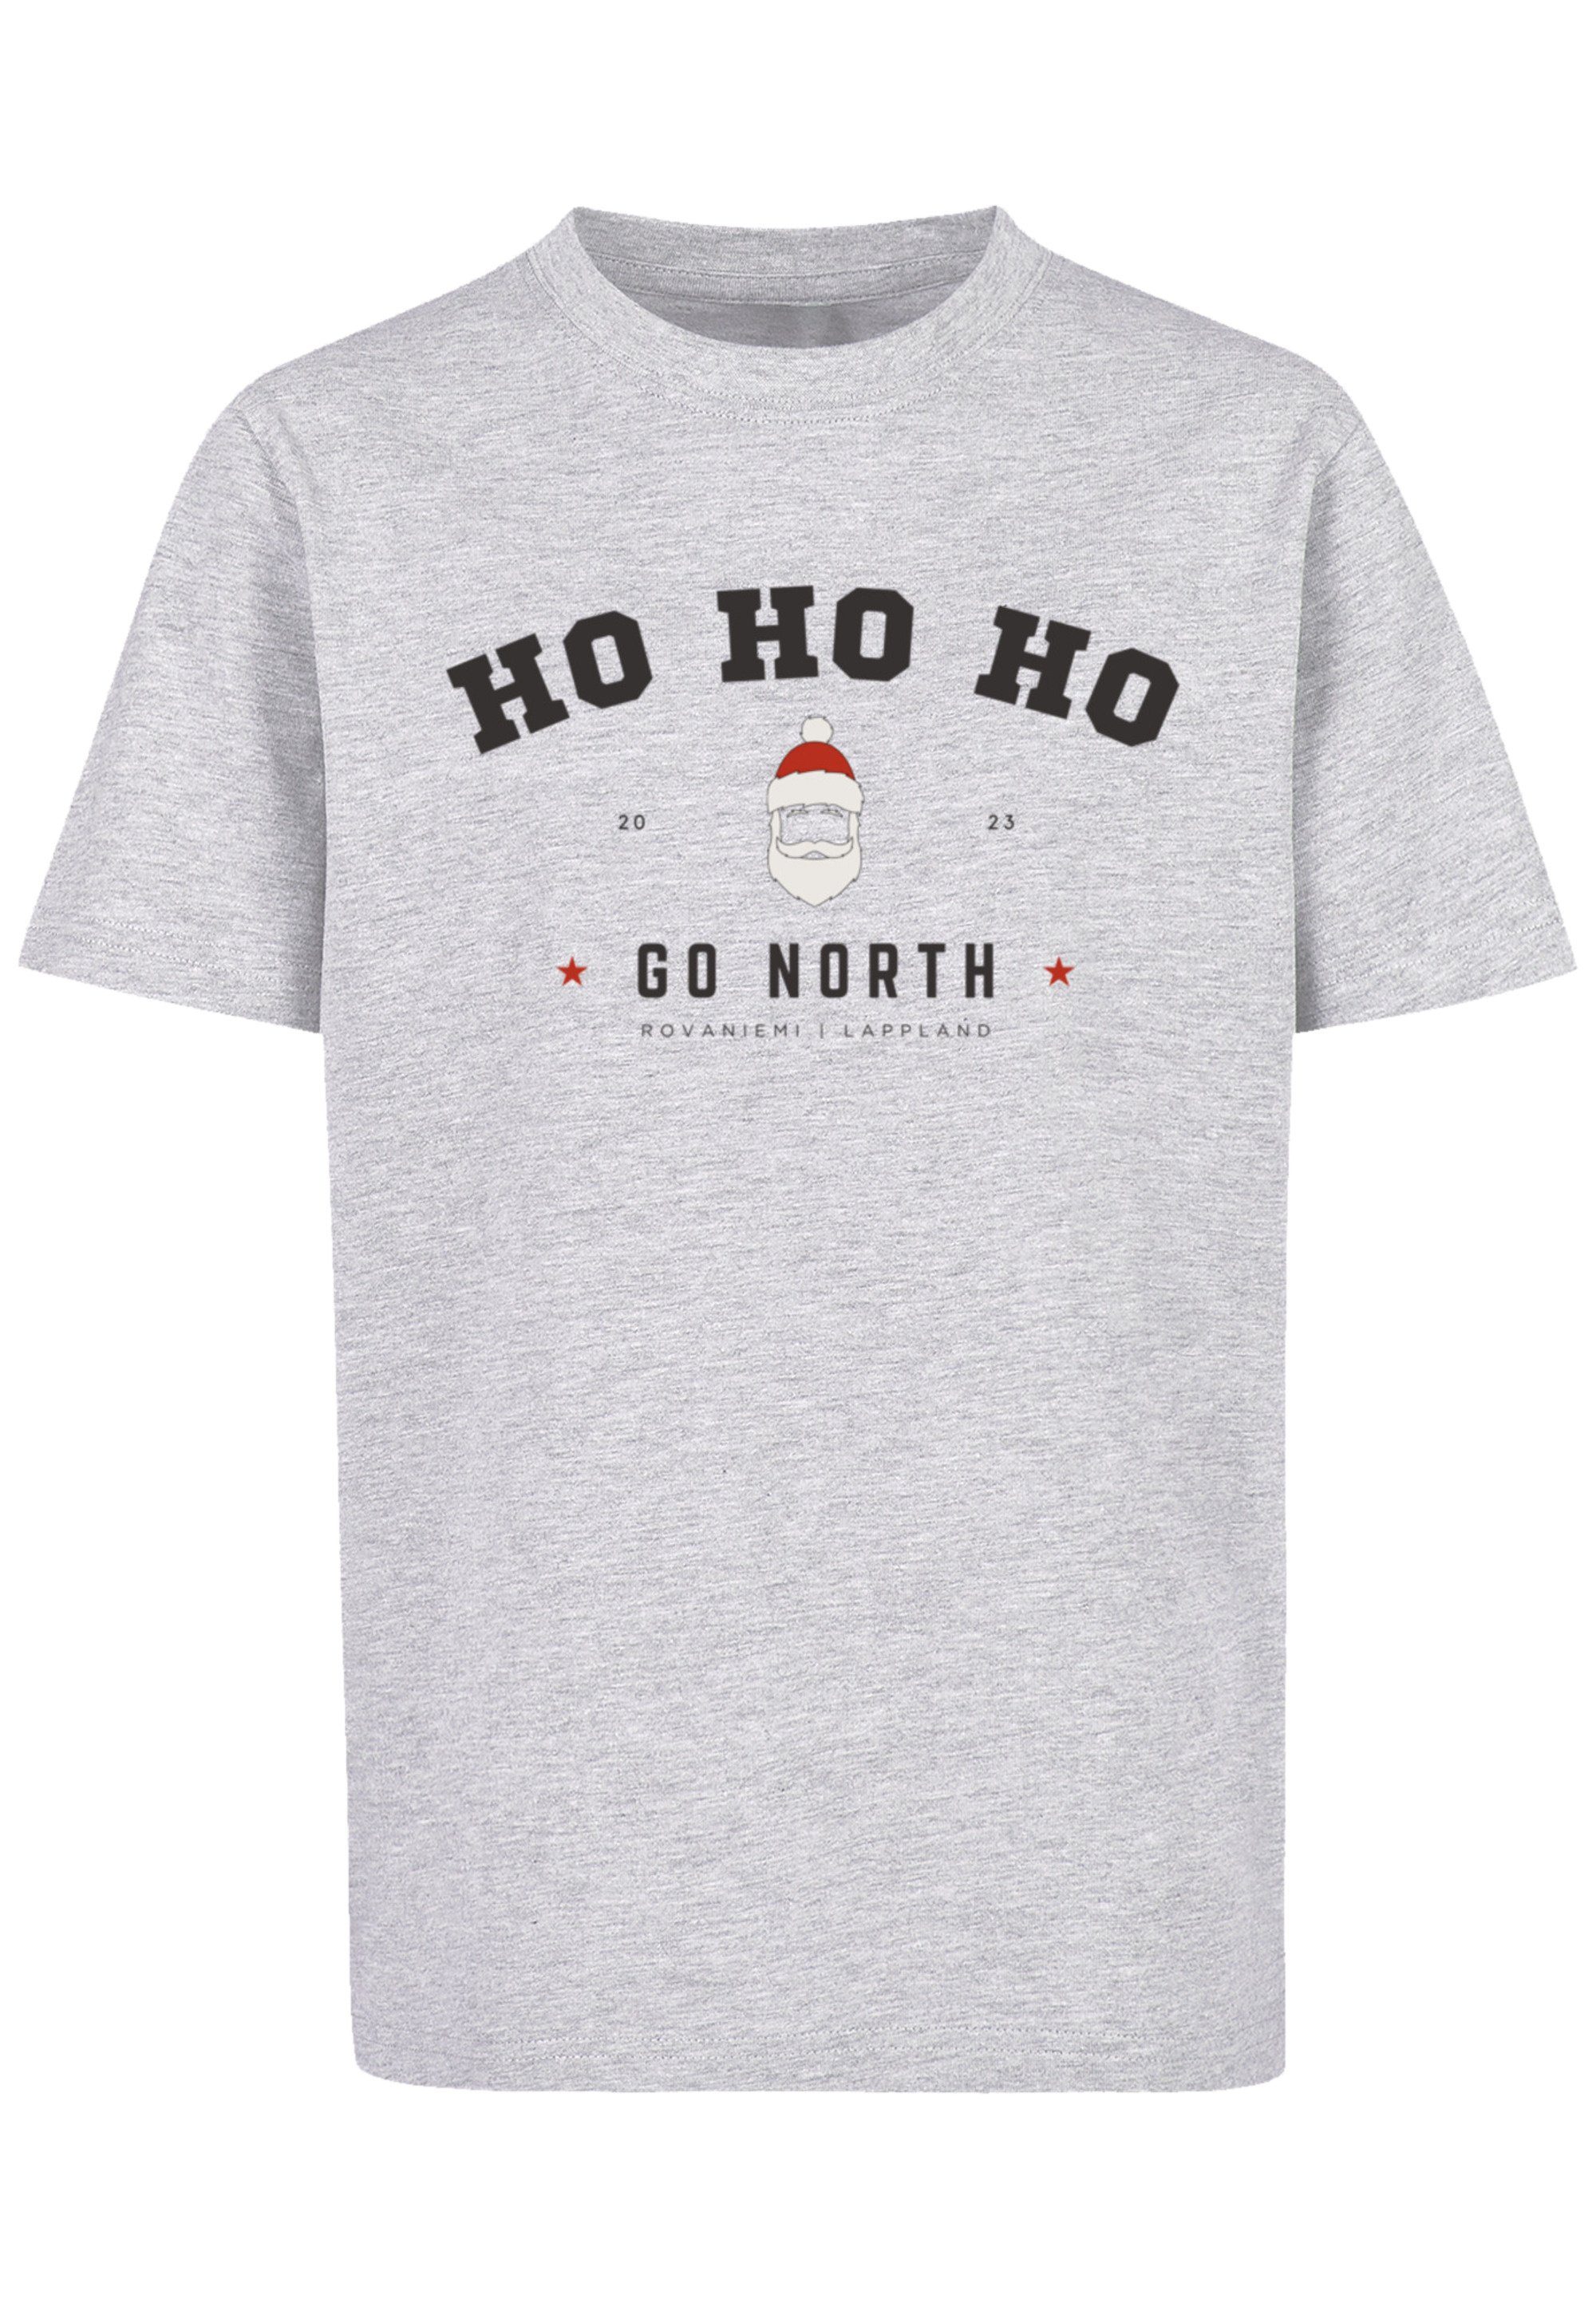 F4NT4STIC T-Shirt Weihnachtsdesign Ho Claus Weihnachten, Ho Geschenk, Weihnachten Ho Logo, mit Kids Santa T-Shirt